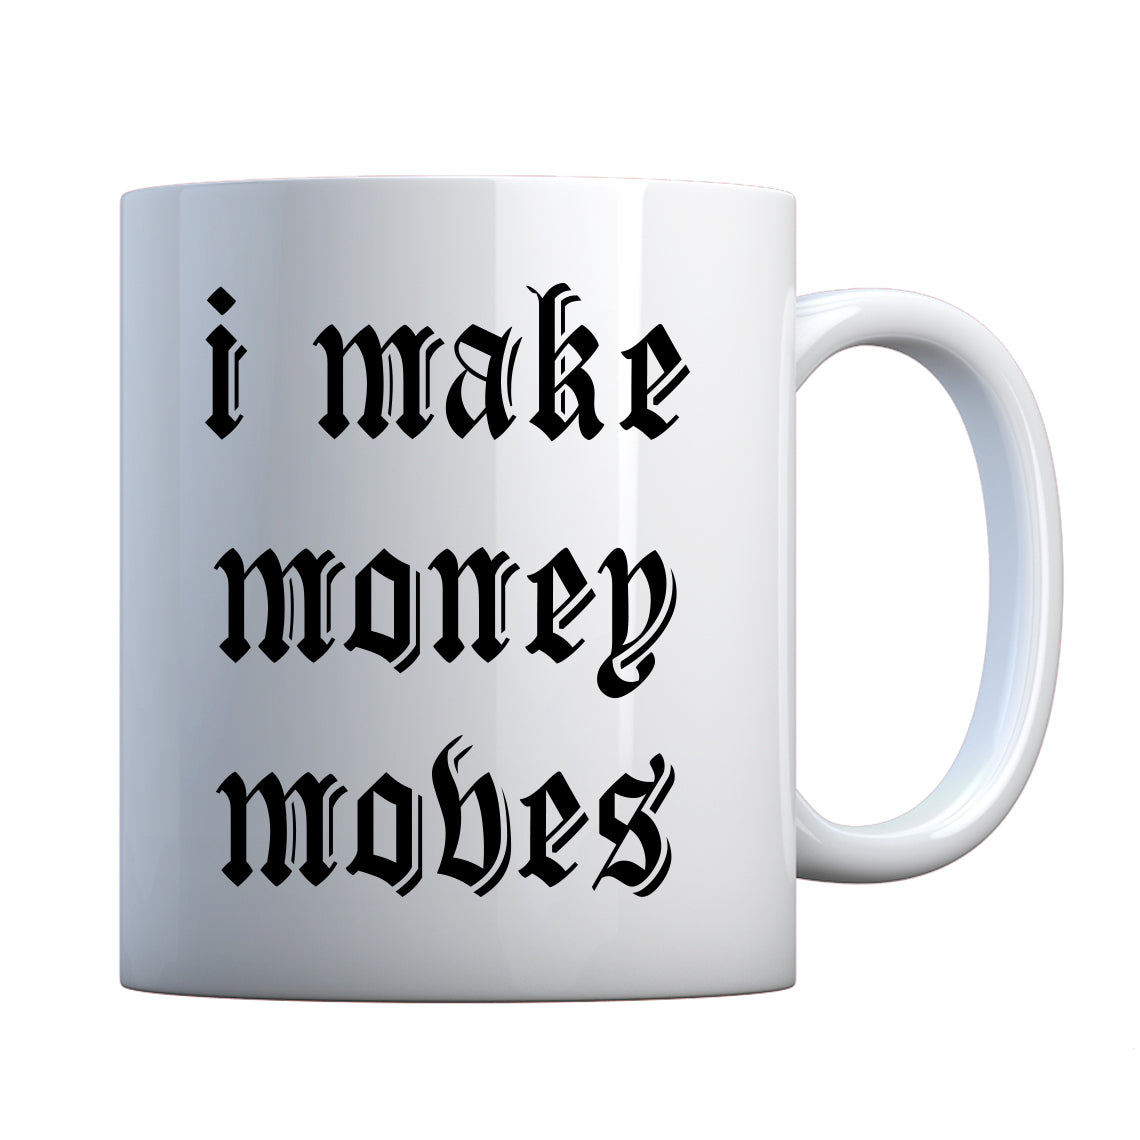 Mug I Make Money Moves Ceramic Gift Mug